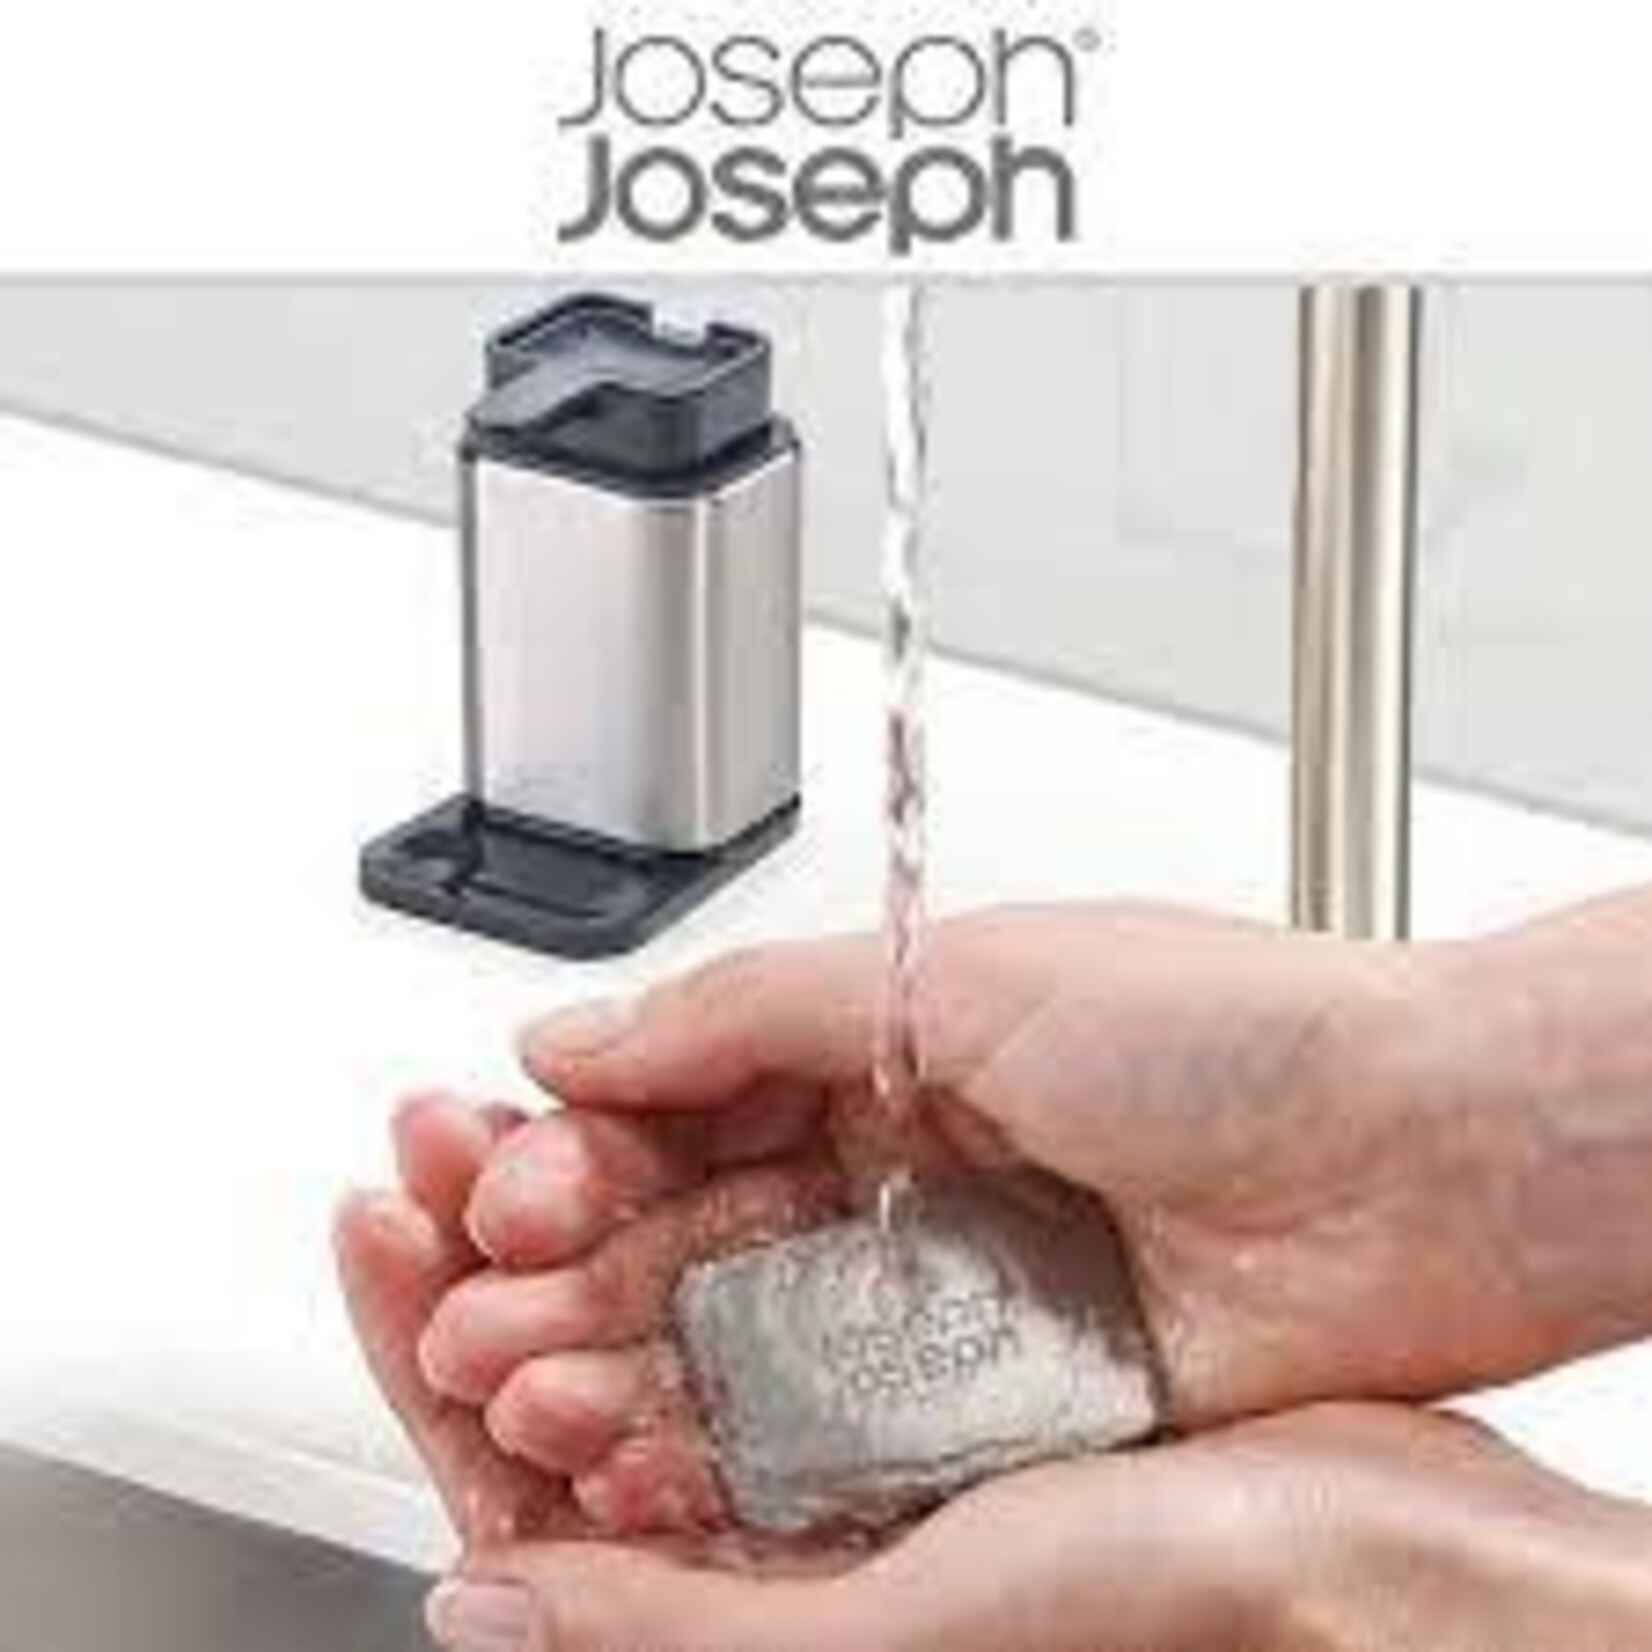 Joseph Joseph rvs zeeppomp 2 in 1 Joseph Joseph surface rvs zeeppomp met rvs anti geur zeep Joseph Joseph 85113